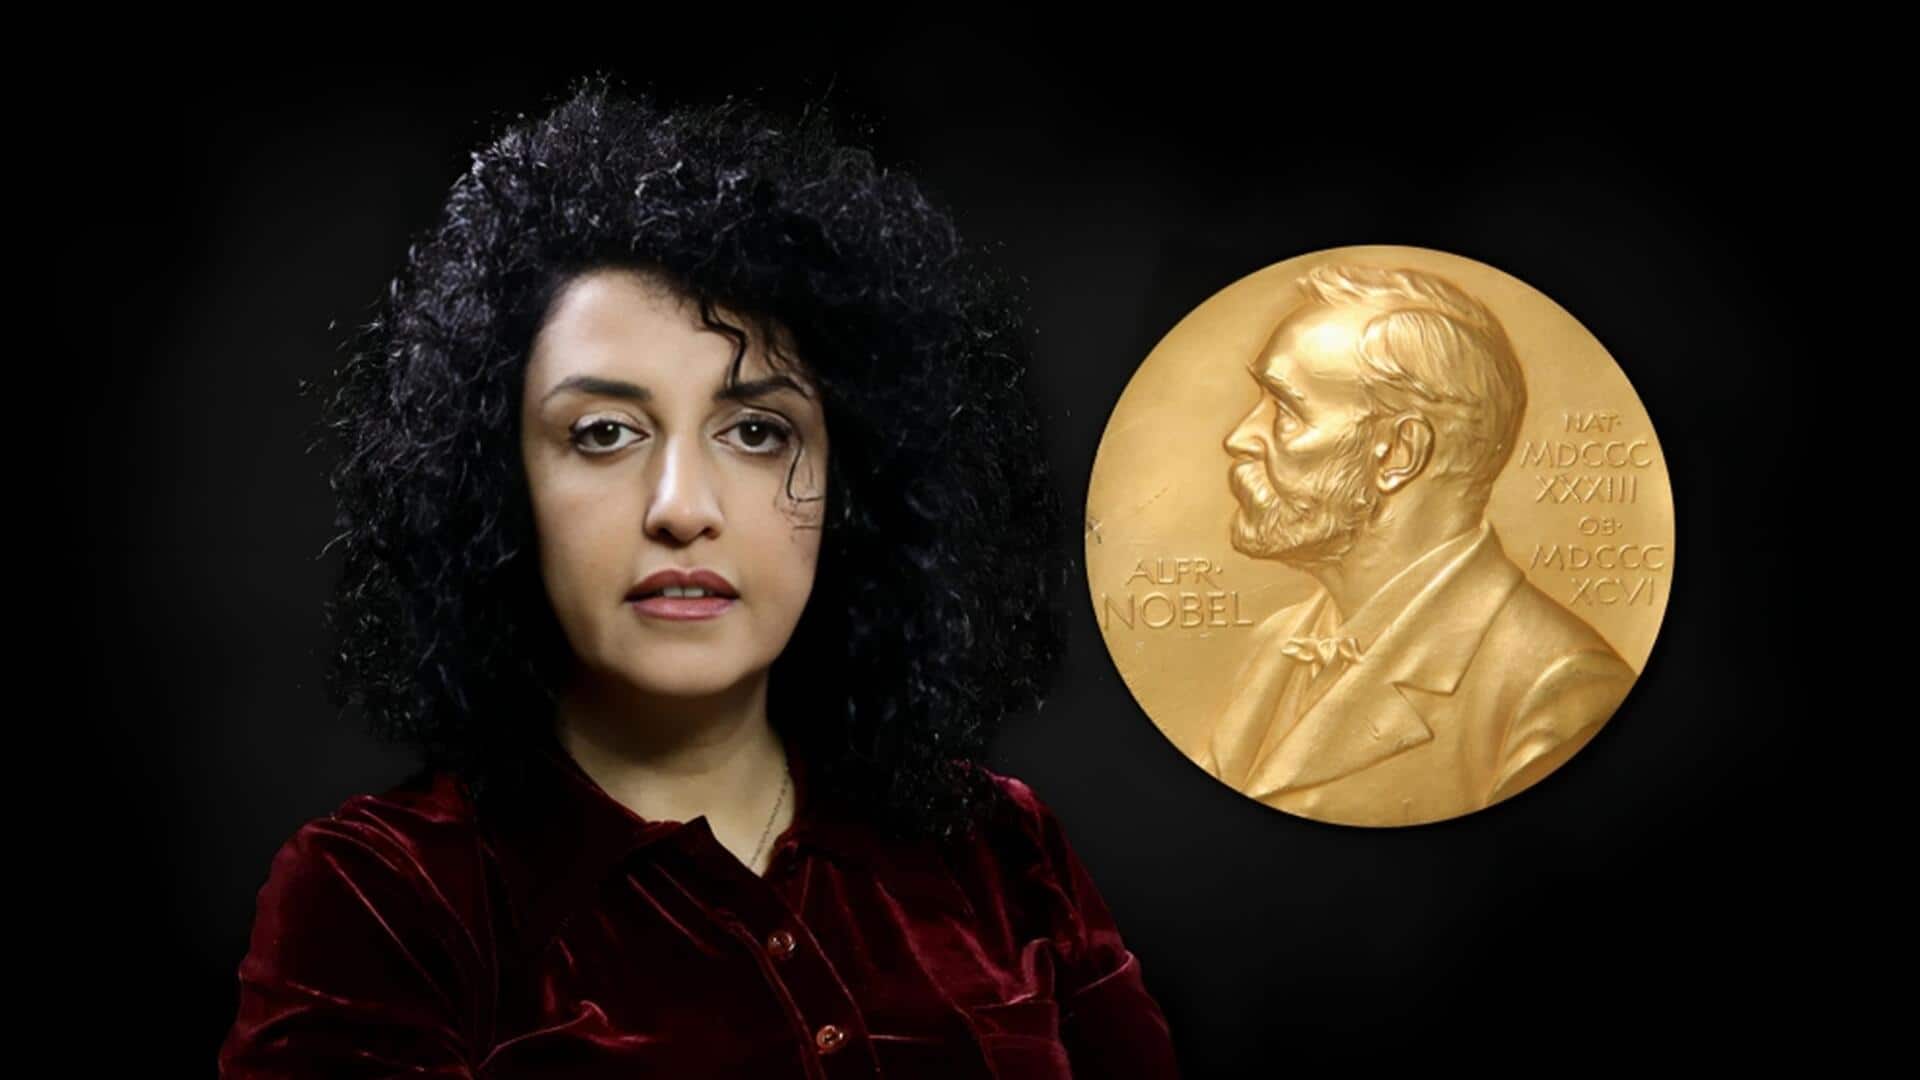 Jailed Iranian activist Narges Mohammadi wins Nobel Peace Prize